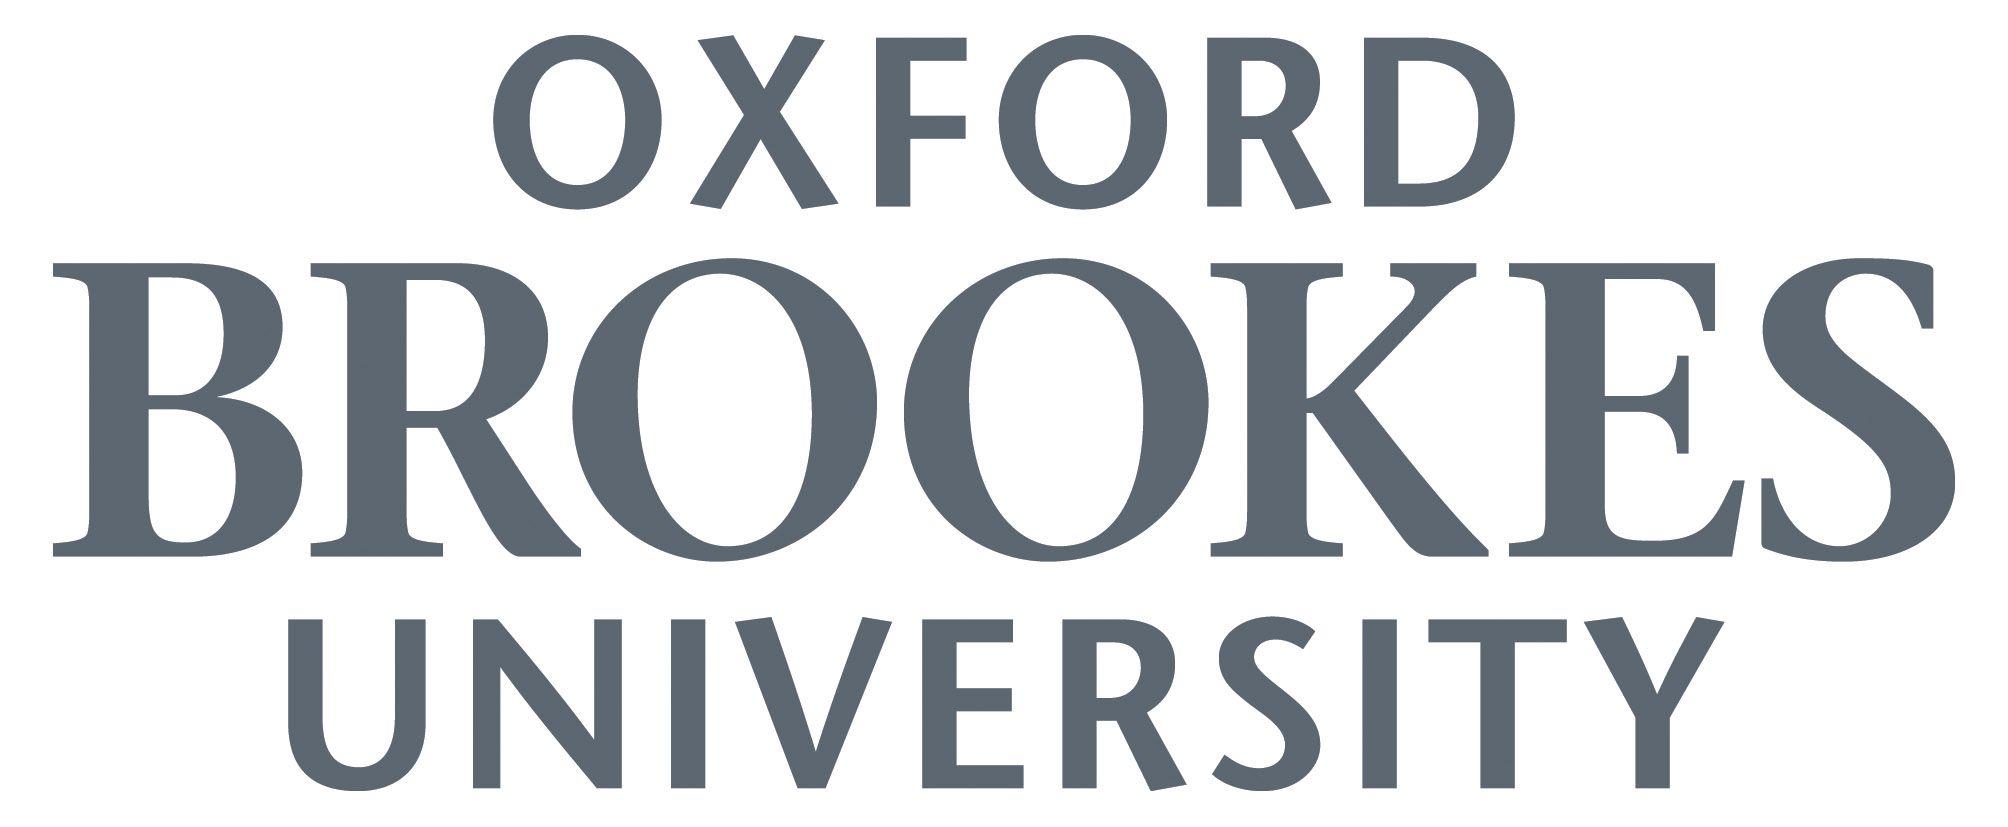 Oxford Logo - Oxford Brookes logos Brookes University